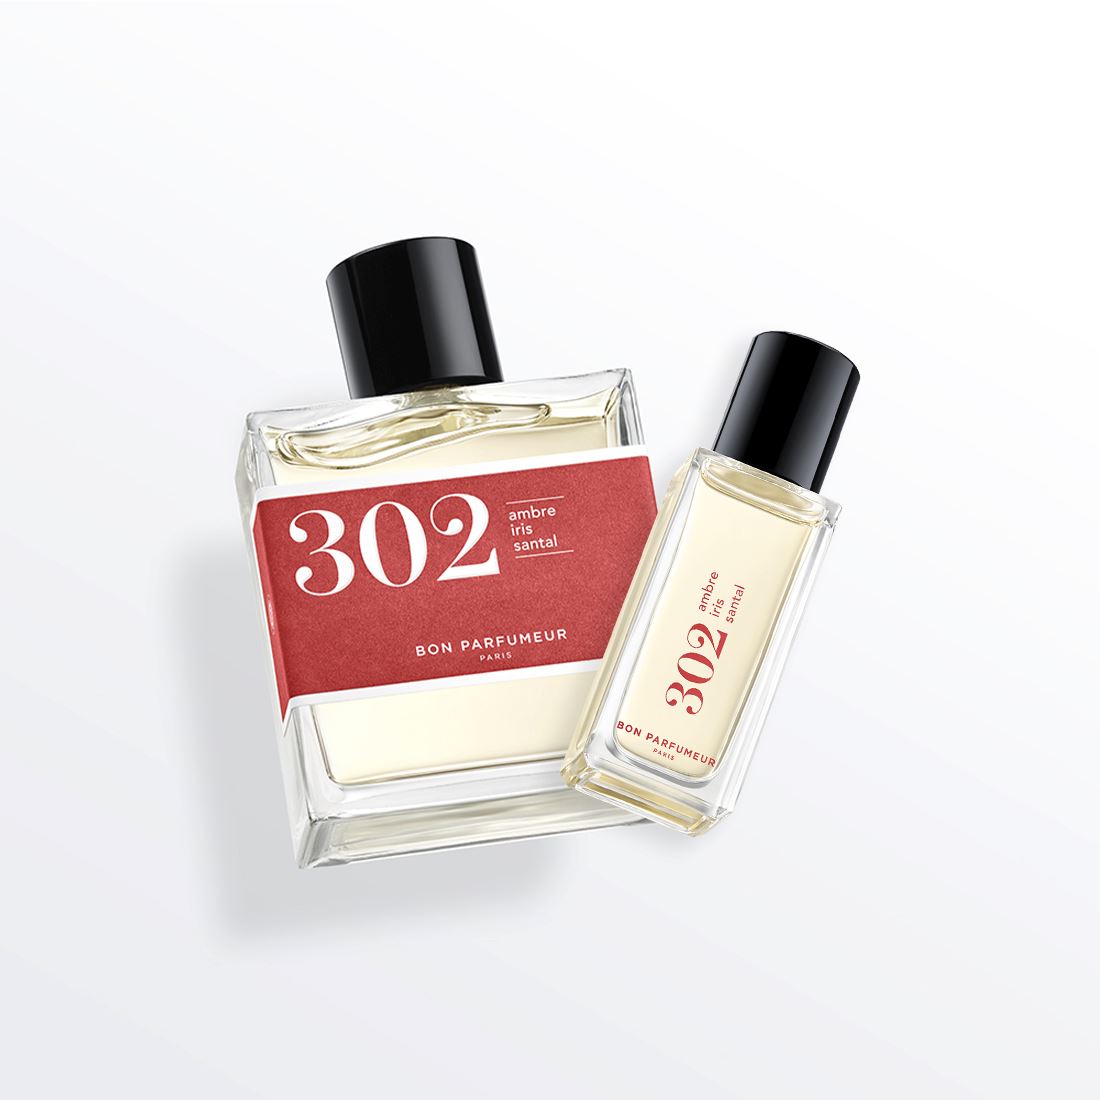 Bon Parfumeur - 302 Amber, Iris, Sandalwood - Eau de Parfum